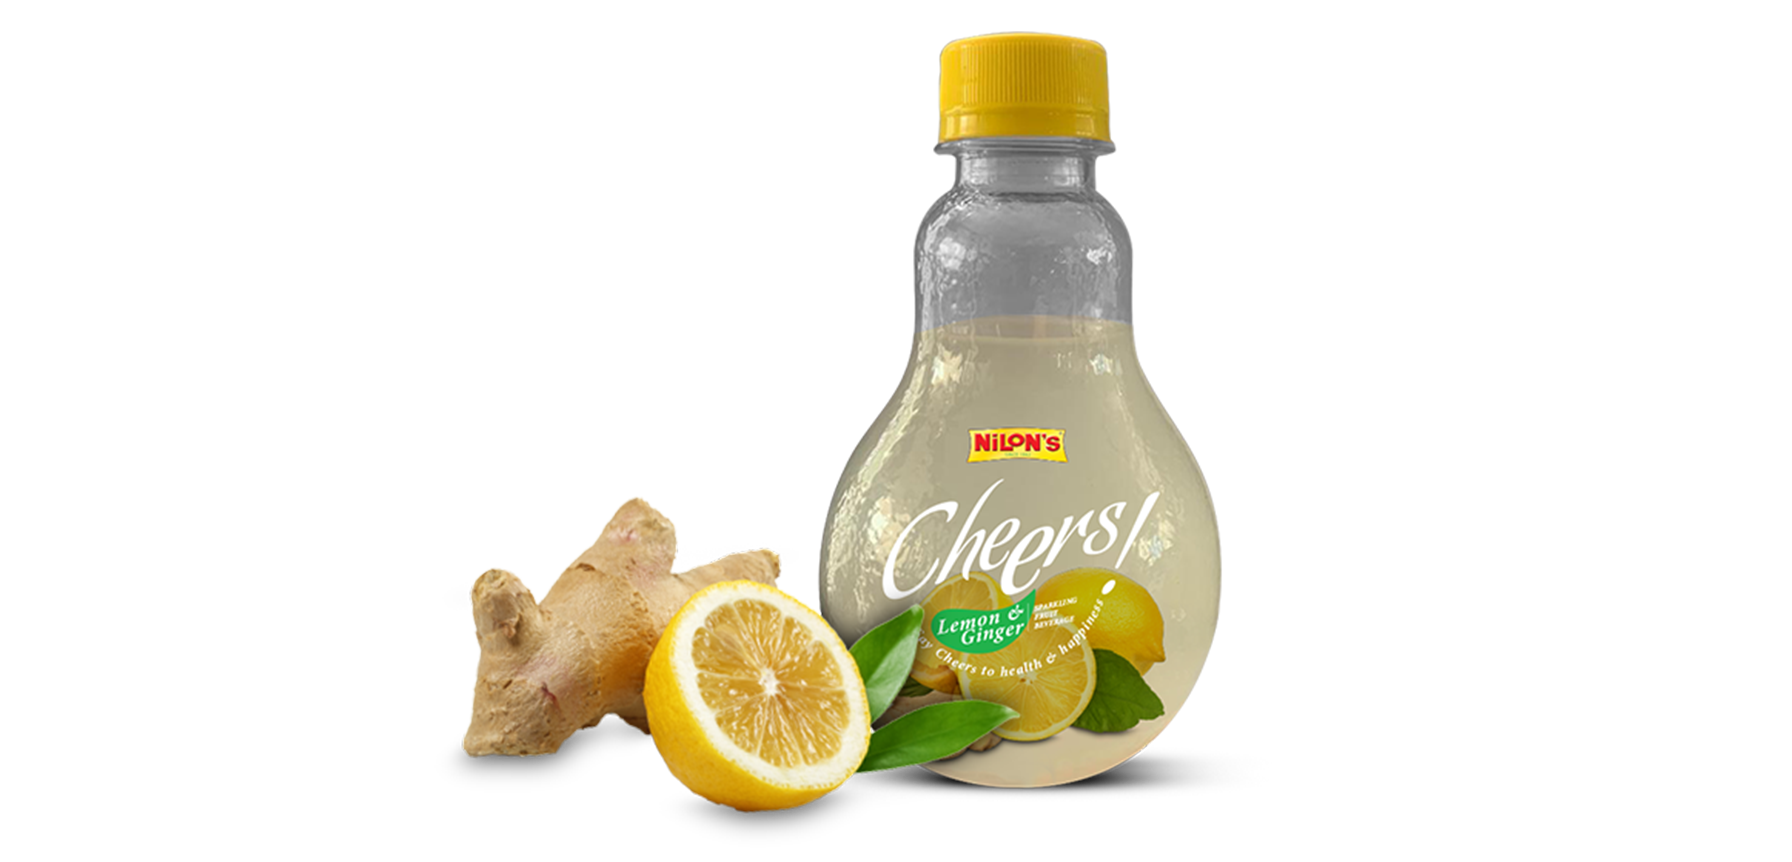 Cheers Lemon and Ginger